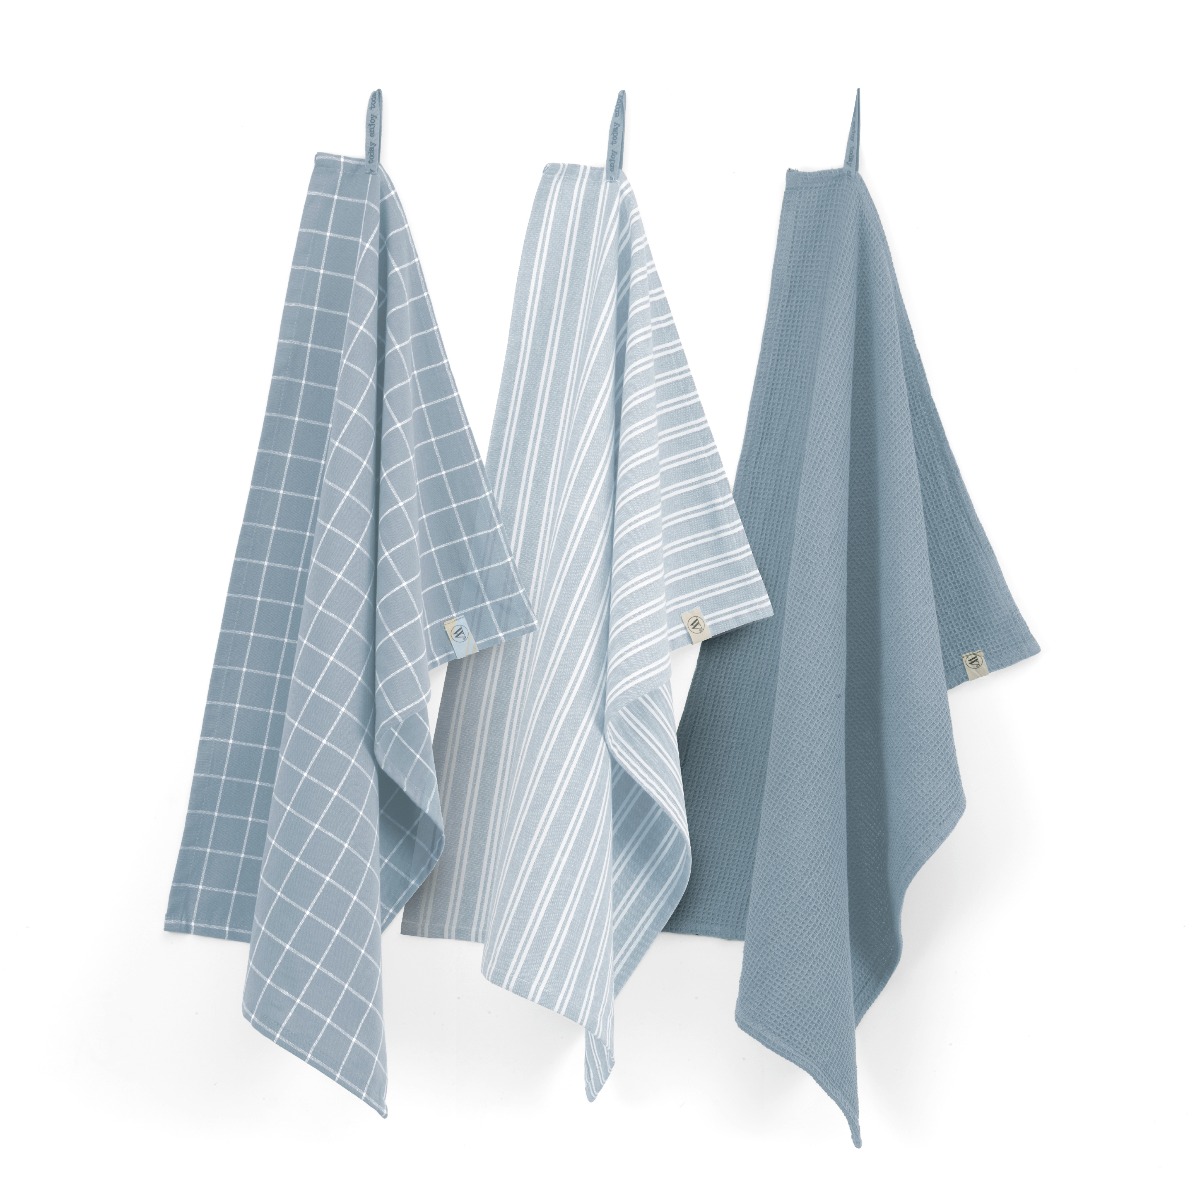 WALRA Keukenset Dry w. Cubes Uni, Stripes & Blocks Jeans Blauw - 3x 50x70 cm